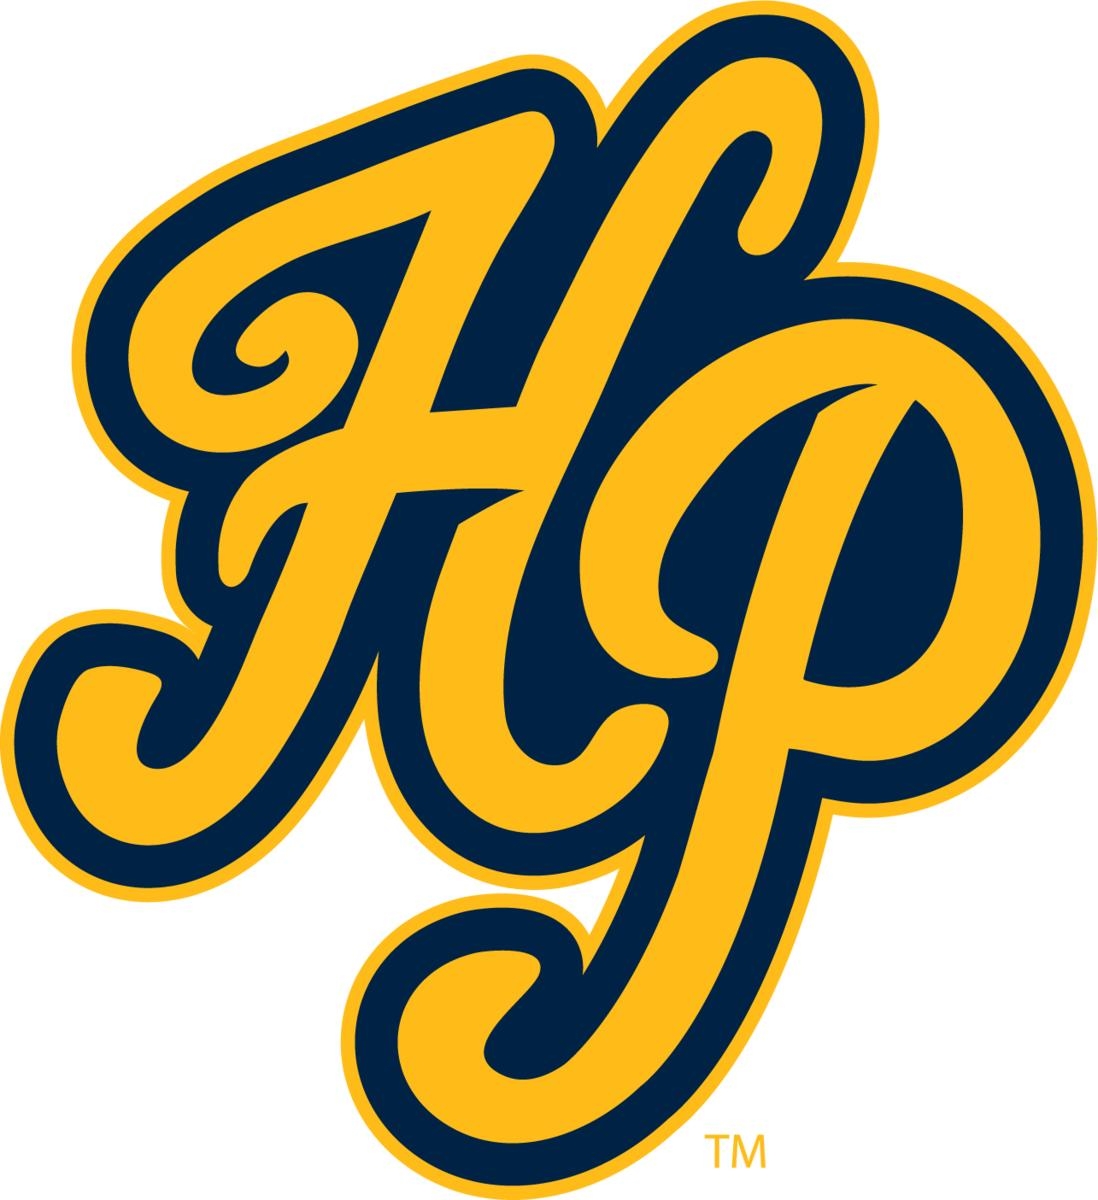 Highland Park logo.